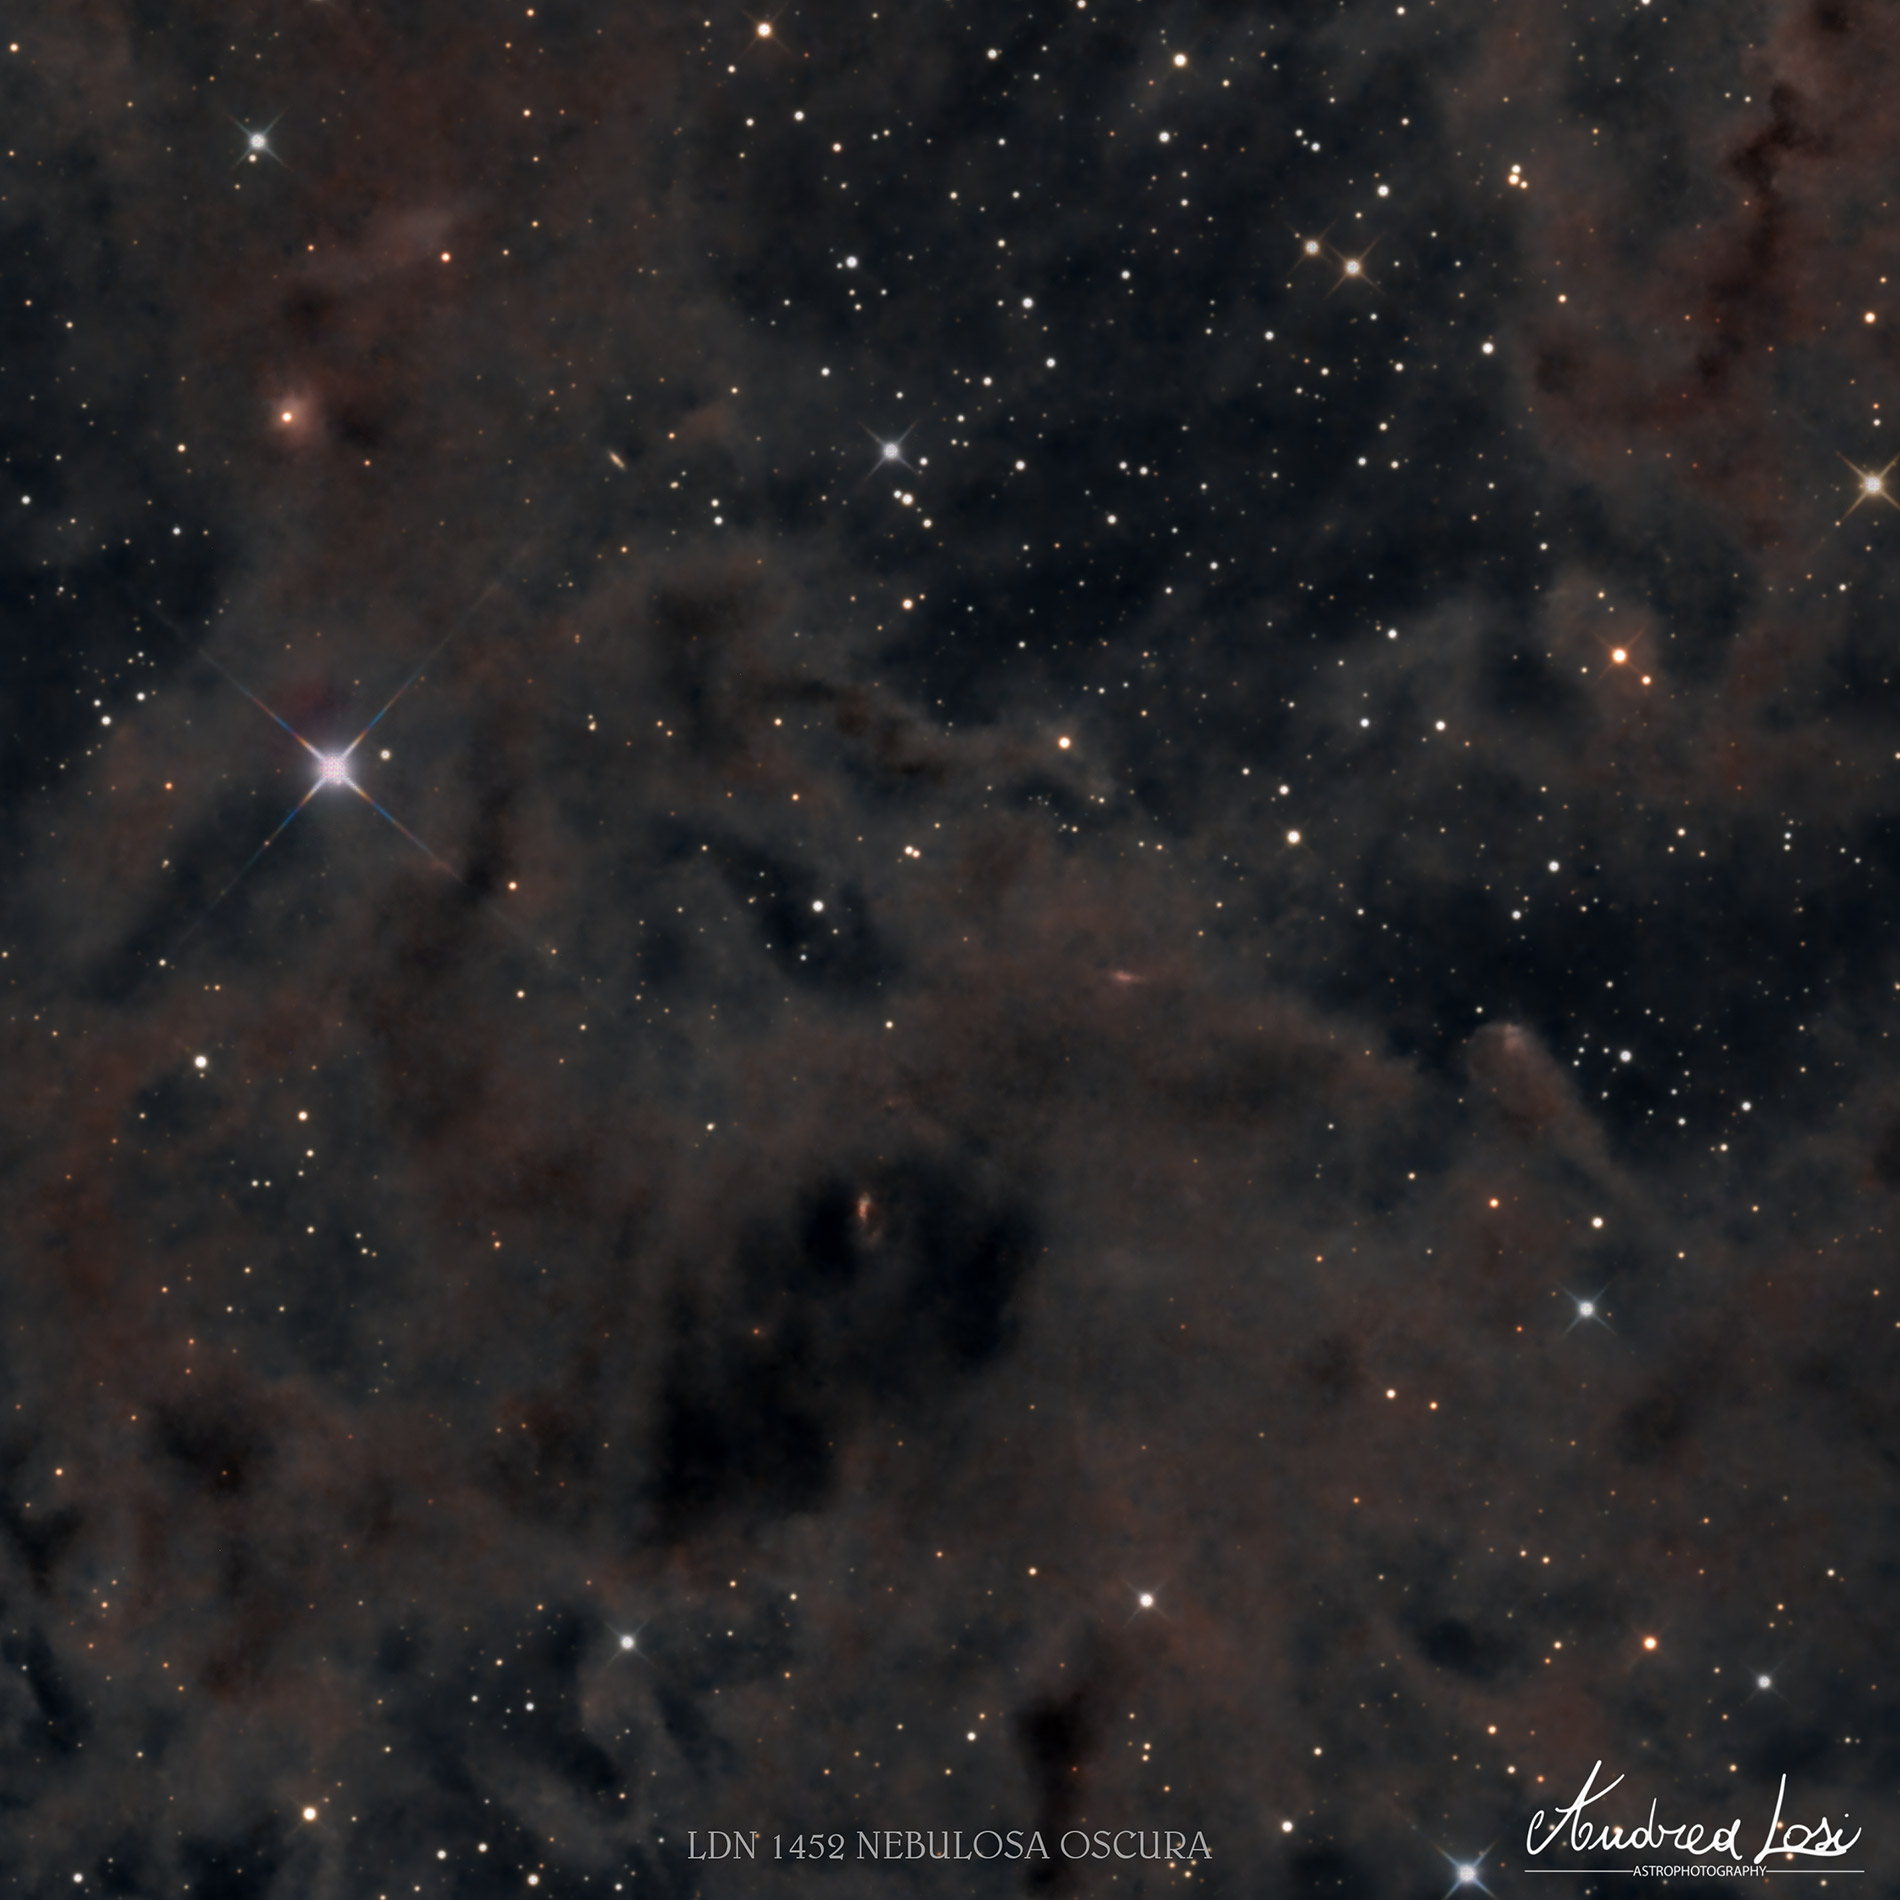 LDN 1452 nebulosa oscura...